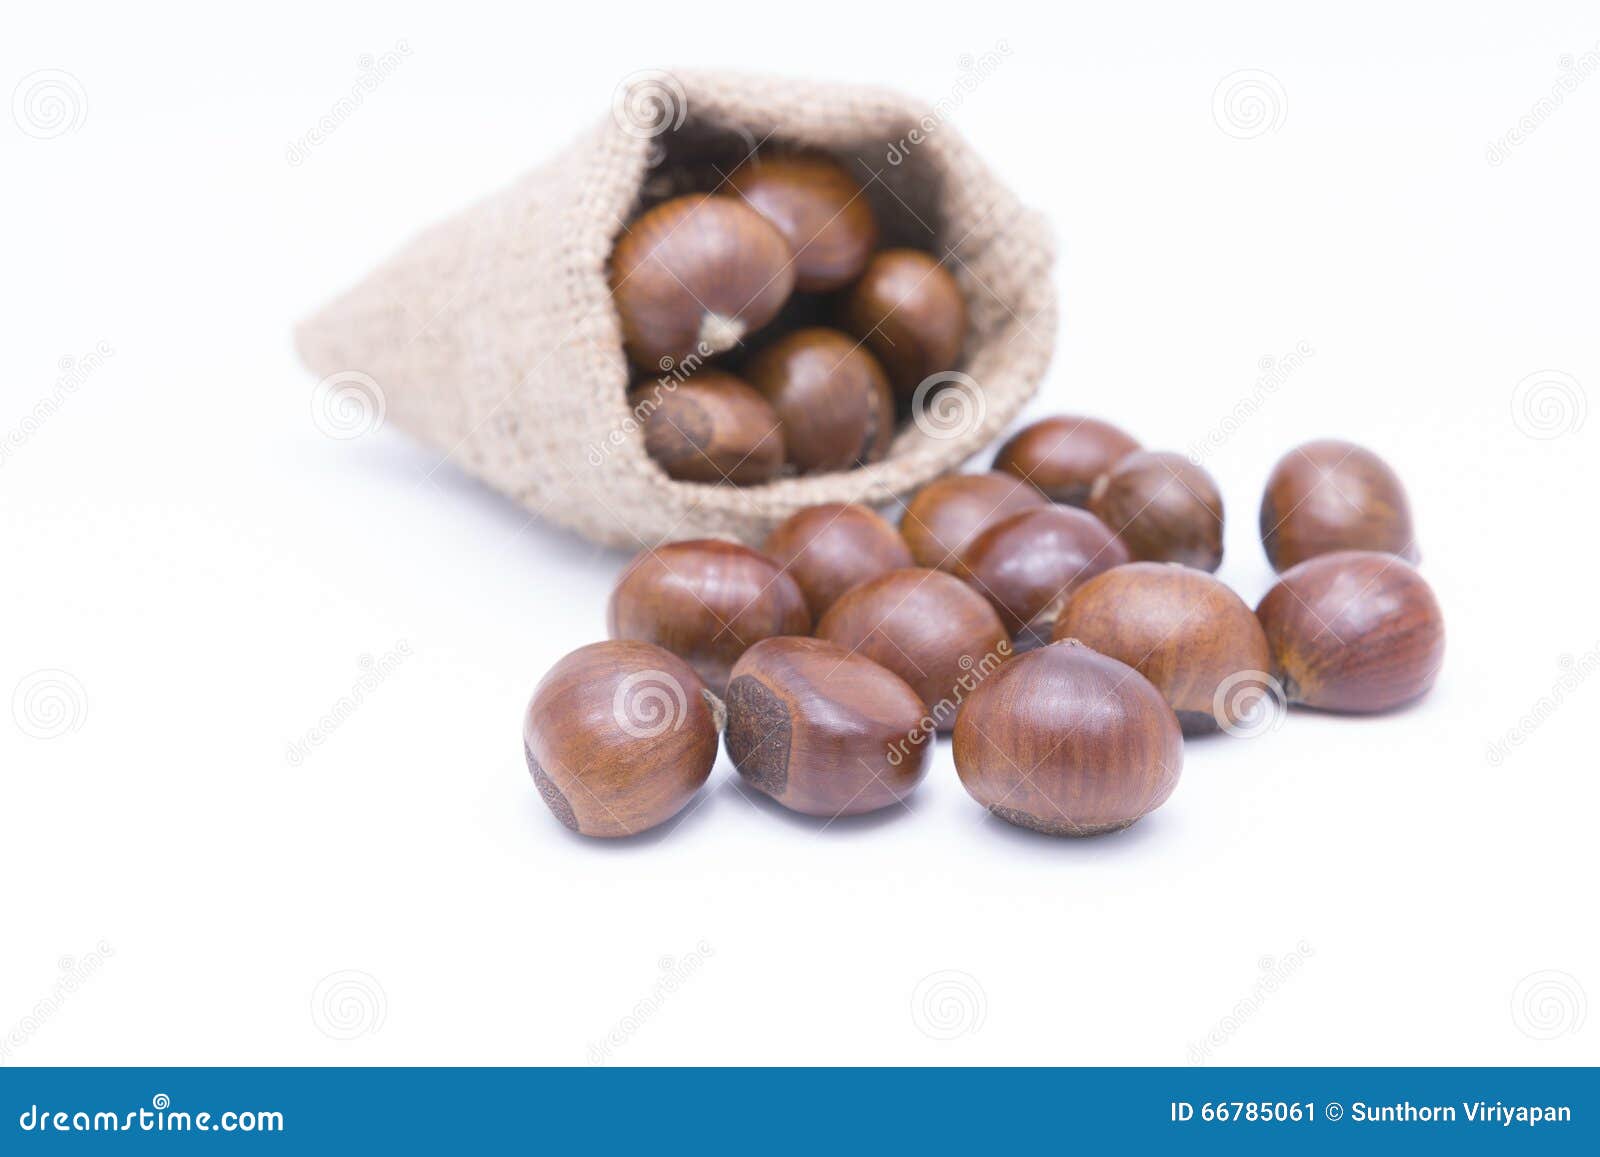 fresh chestnuts in yute  on white